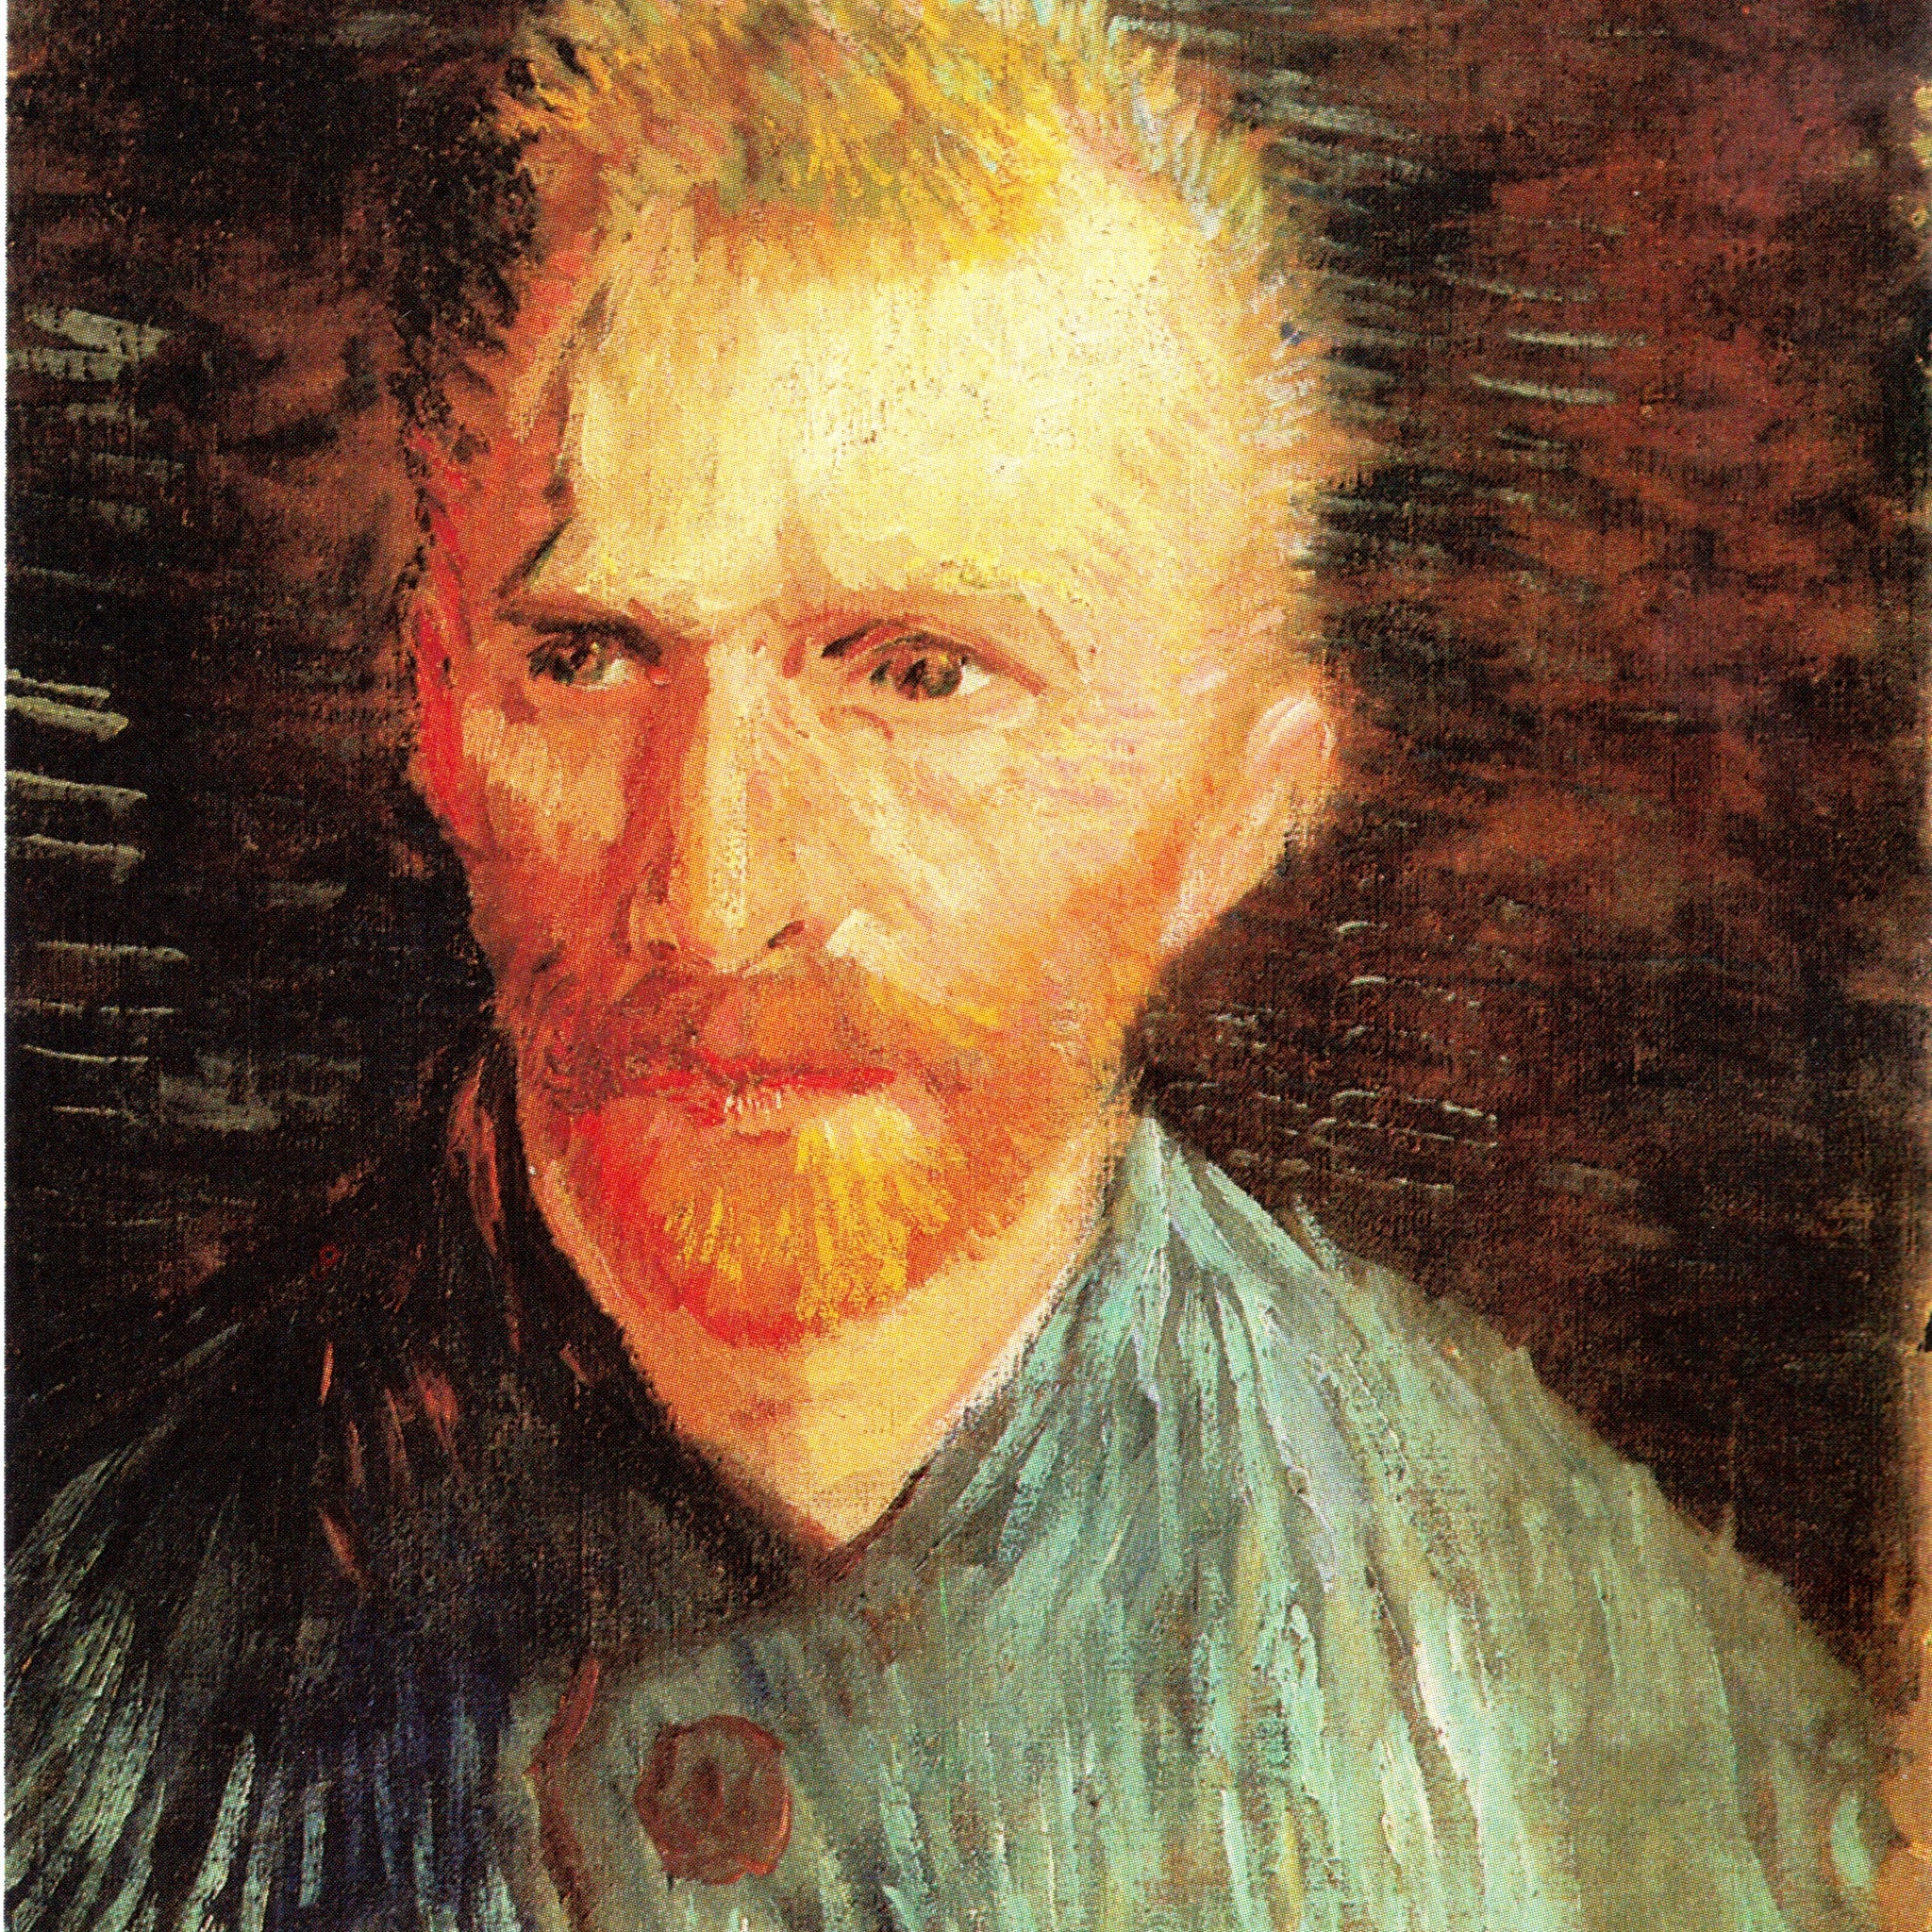 Autoportrait Vincent Van Gogh,1887 - Van Gogh